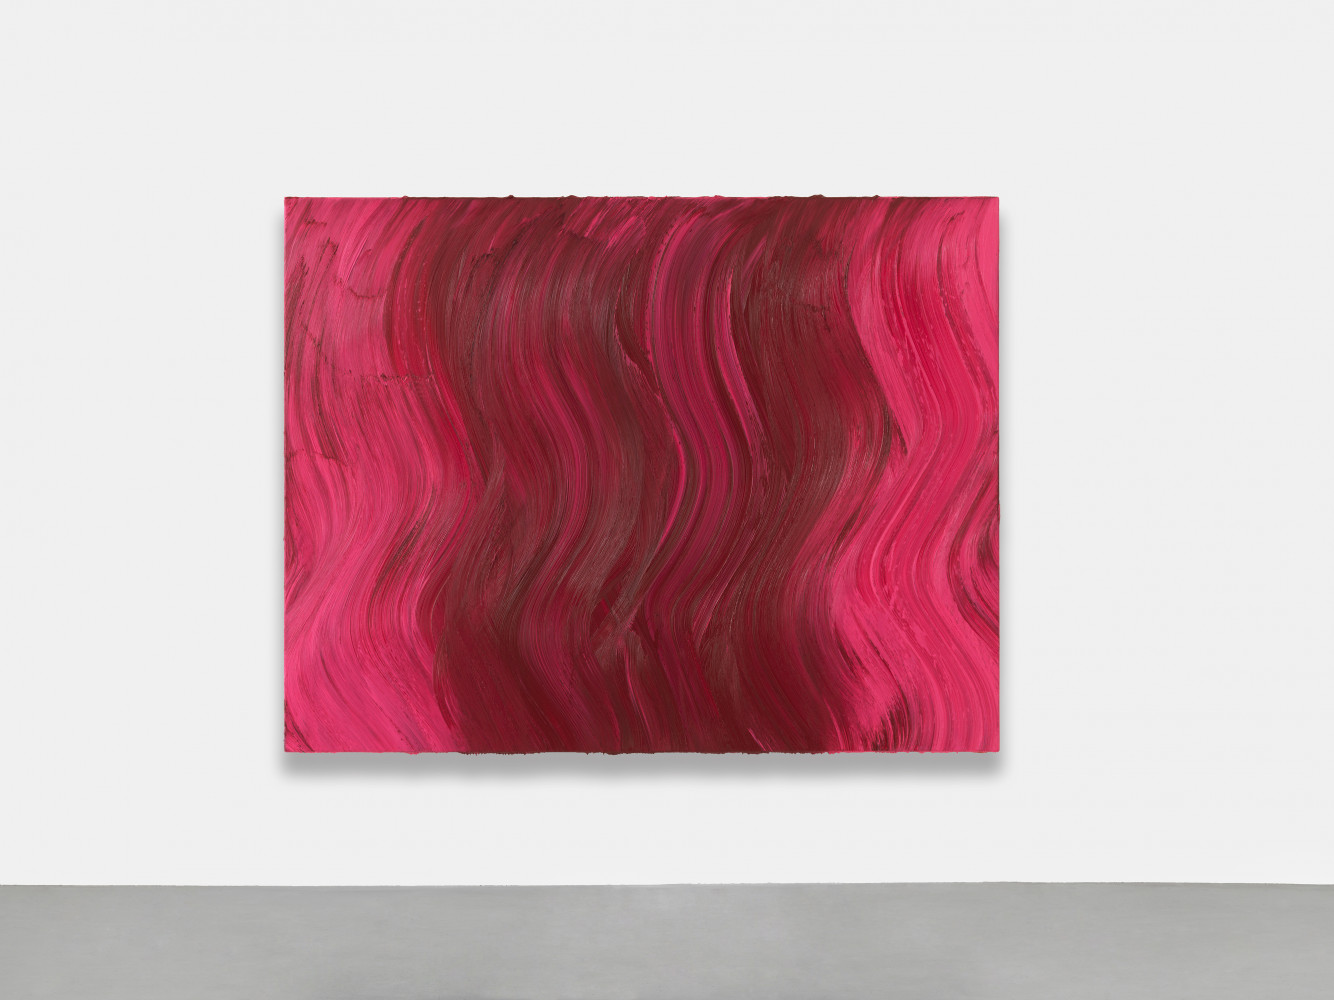 Jason Martin, ‘Untitled (Brilliant pink / Ideal rose)’, 2020